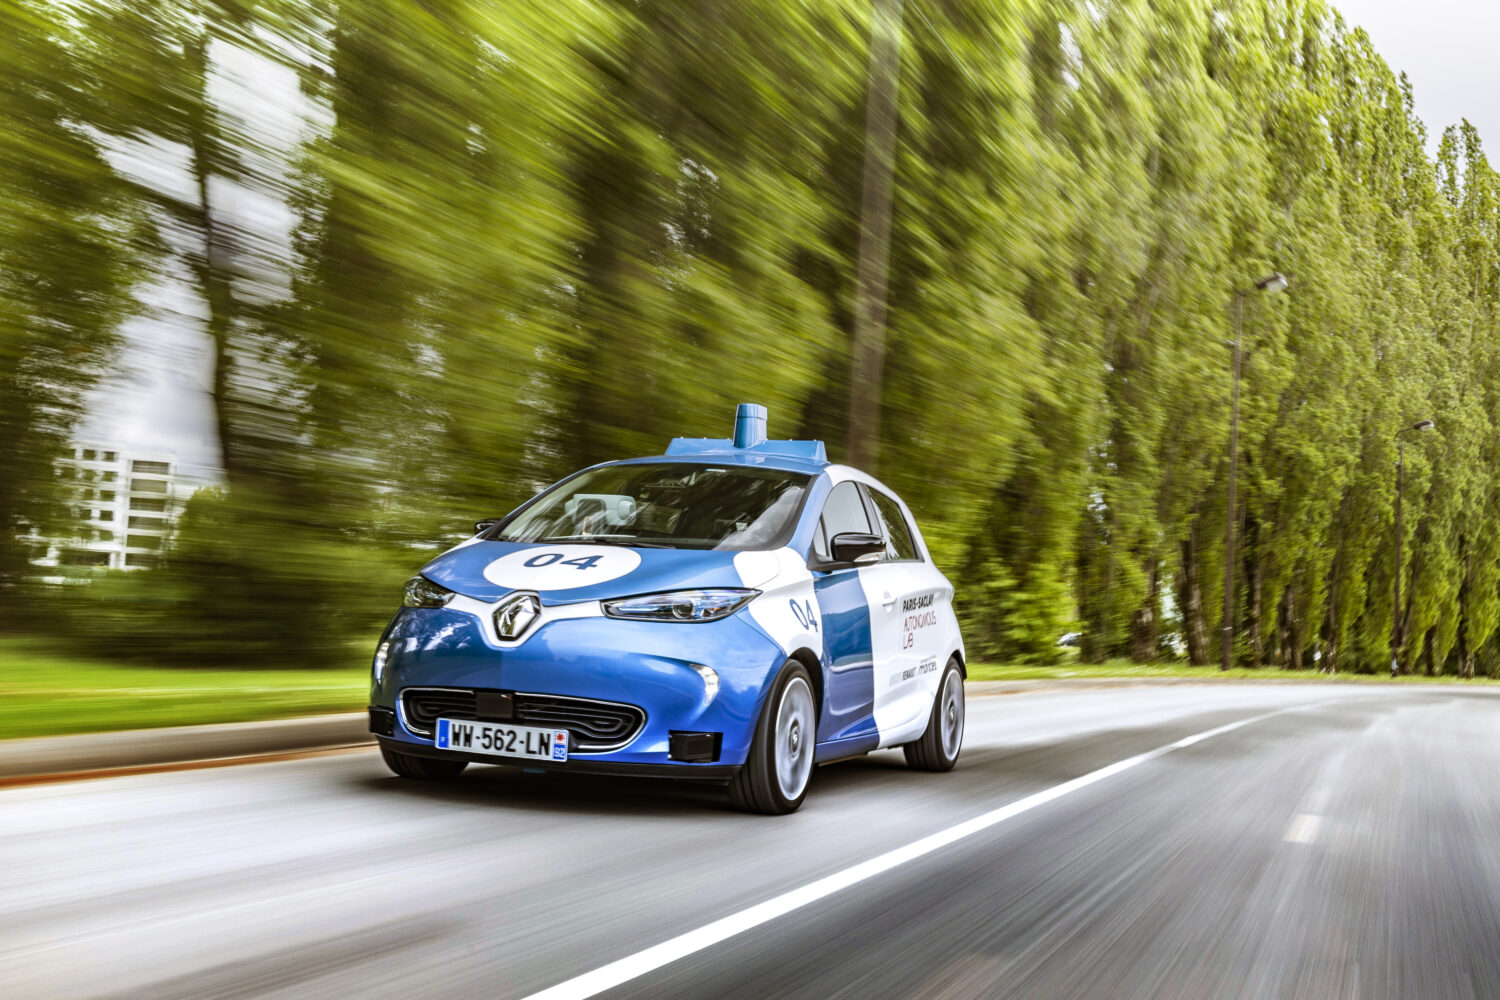 ‘Paris-Saclay Autonomous Lab’: Groupe Renault starts public trial of its on-demand car service using autonomous, electric and shared ZOE Cab